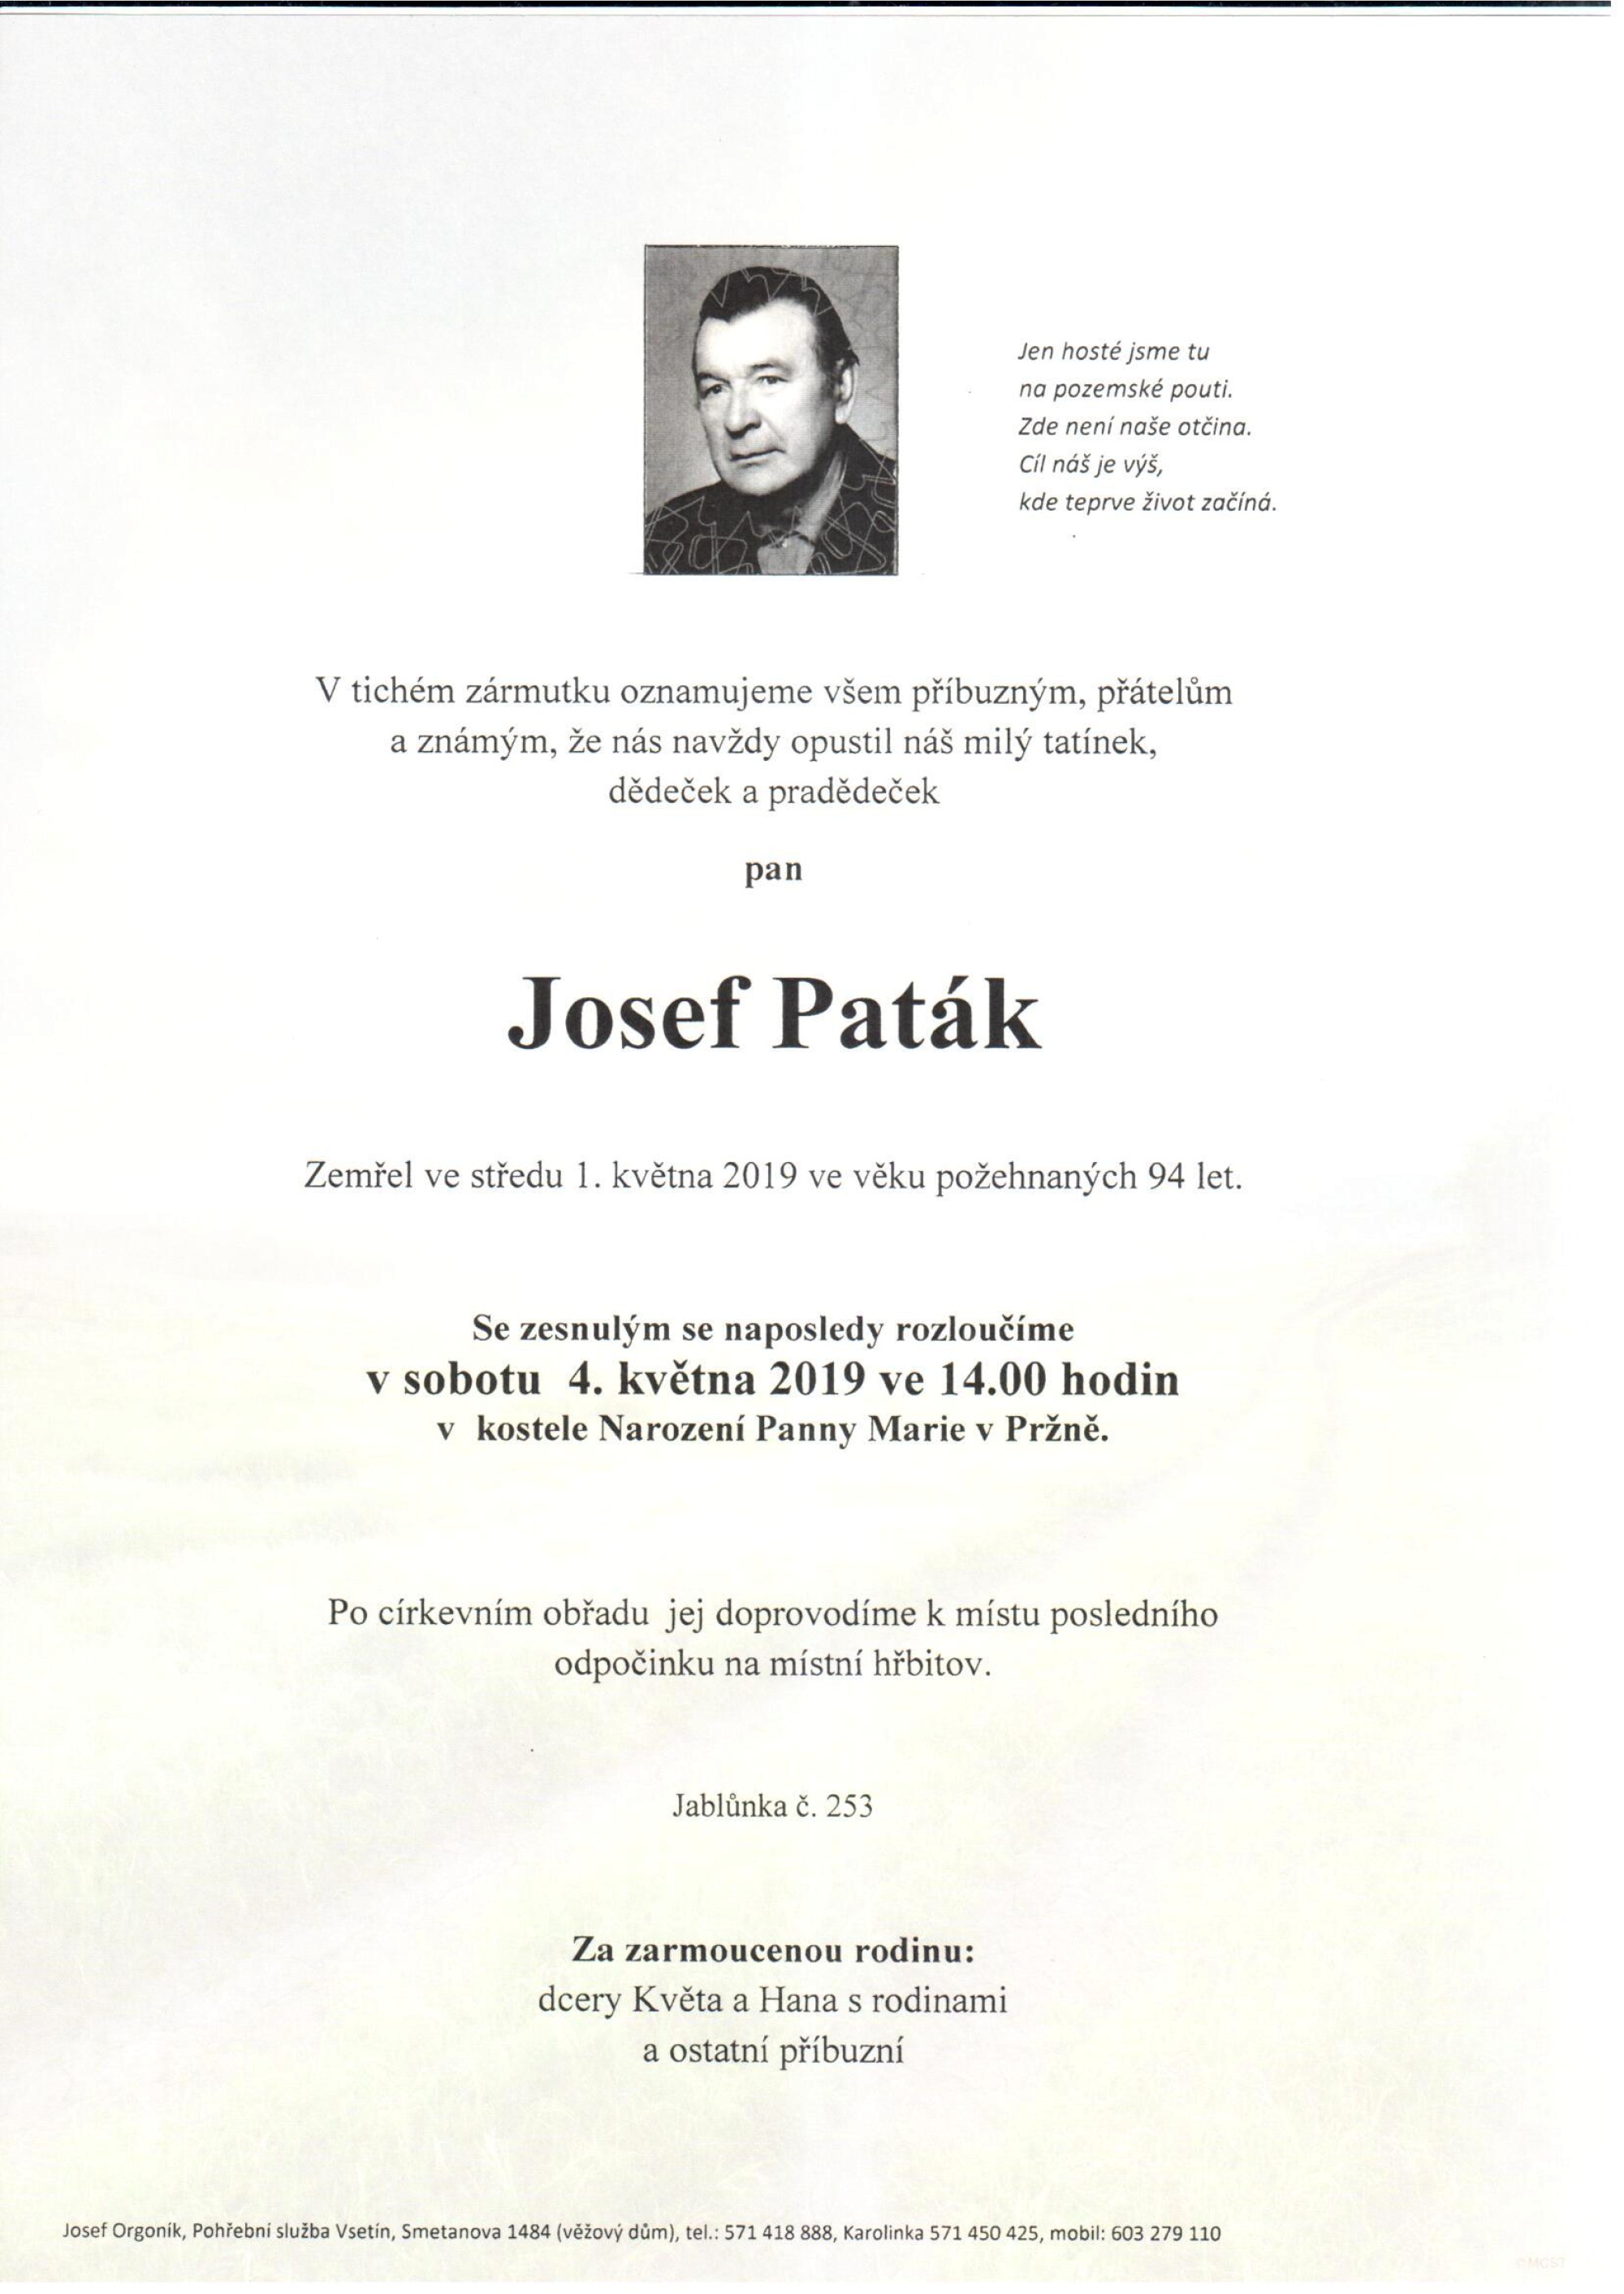 Josef Paták